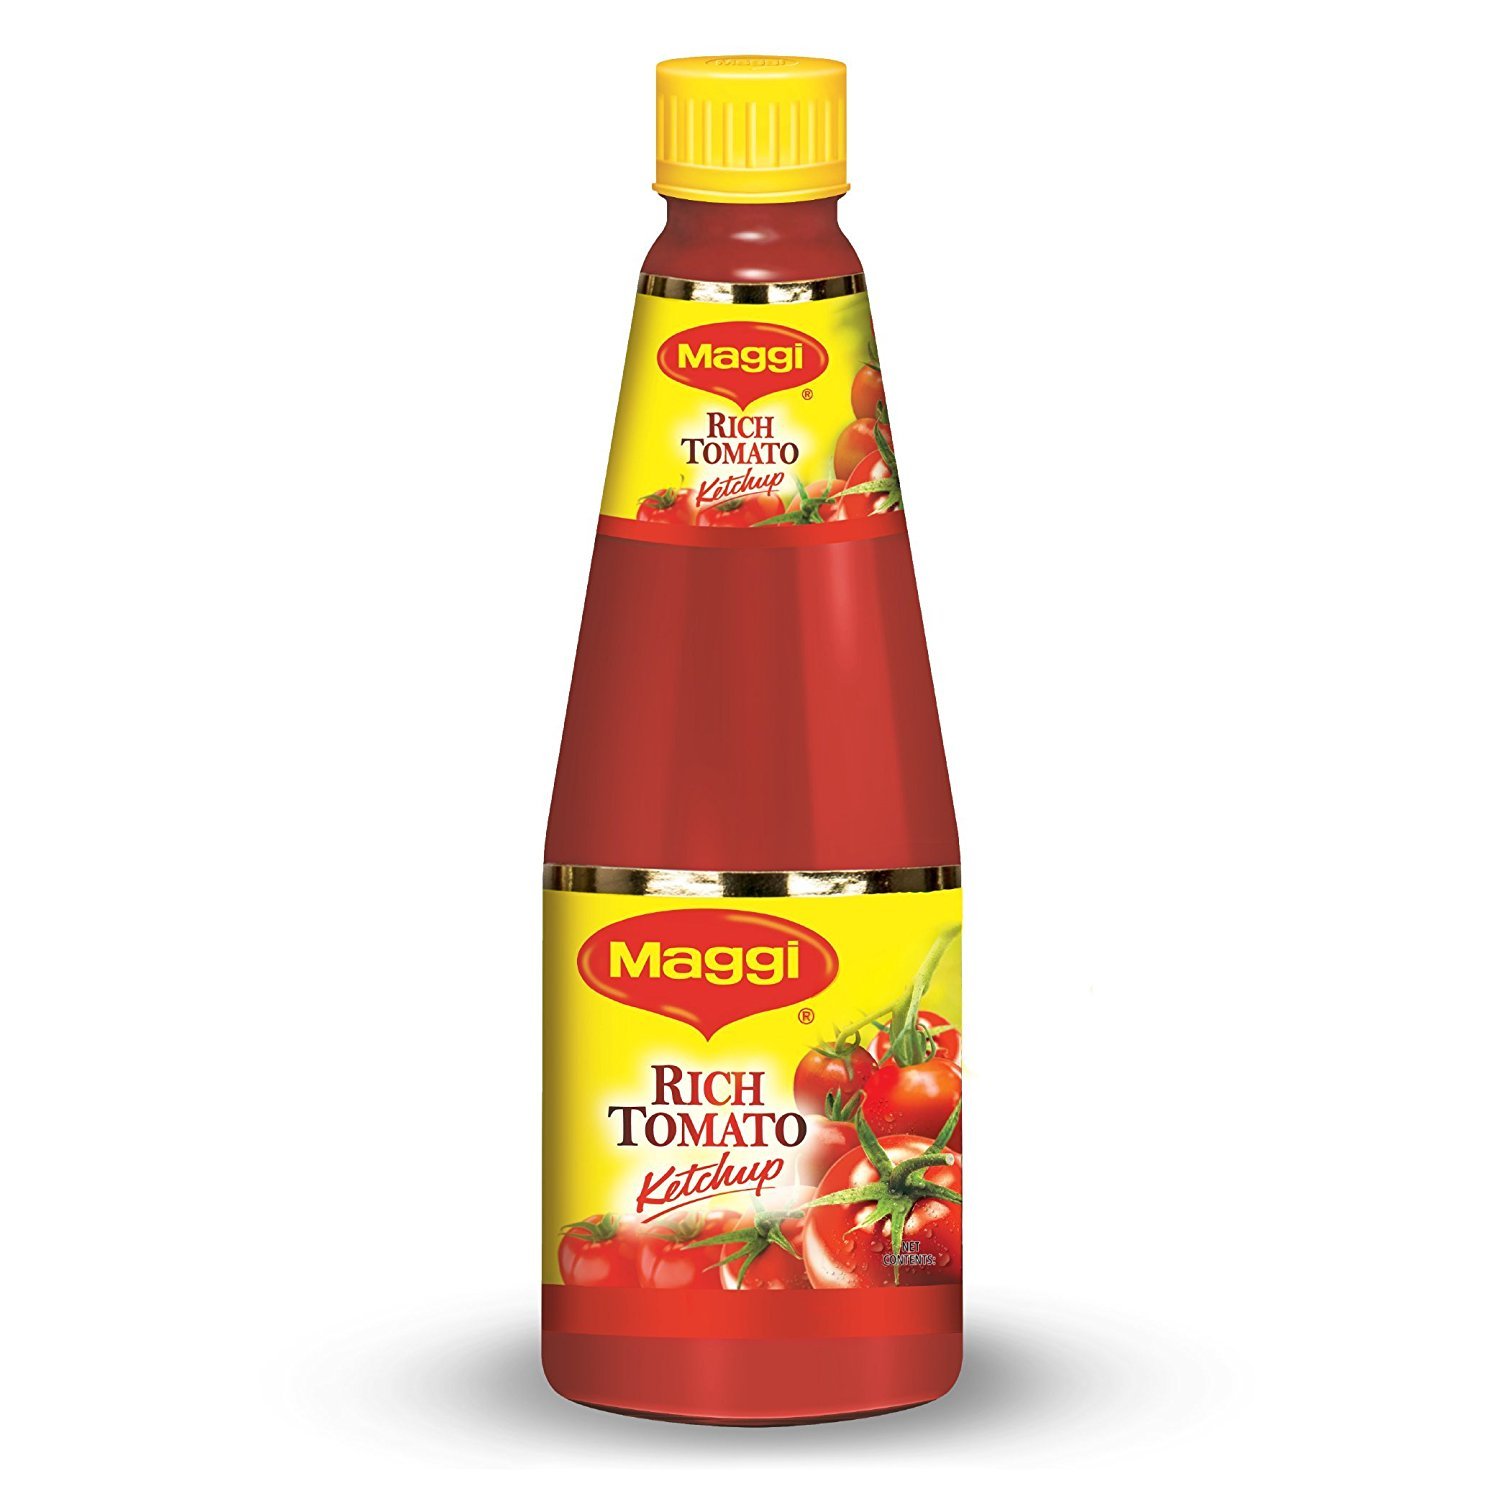 (Maggie) Tomato ketchup 500g